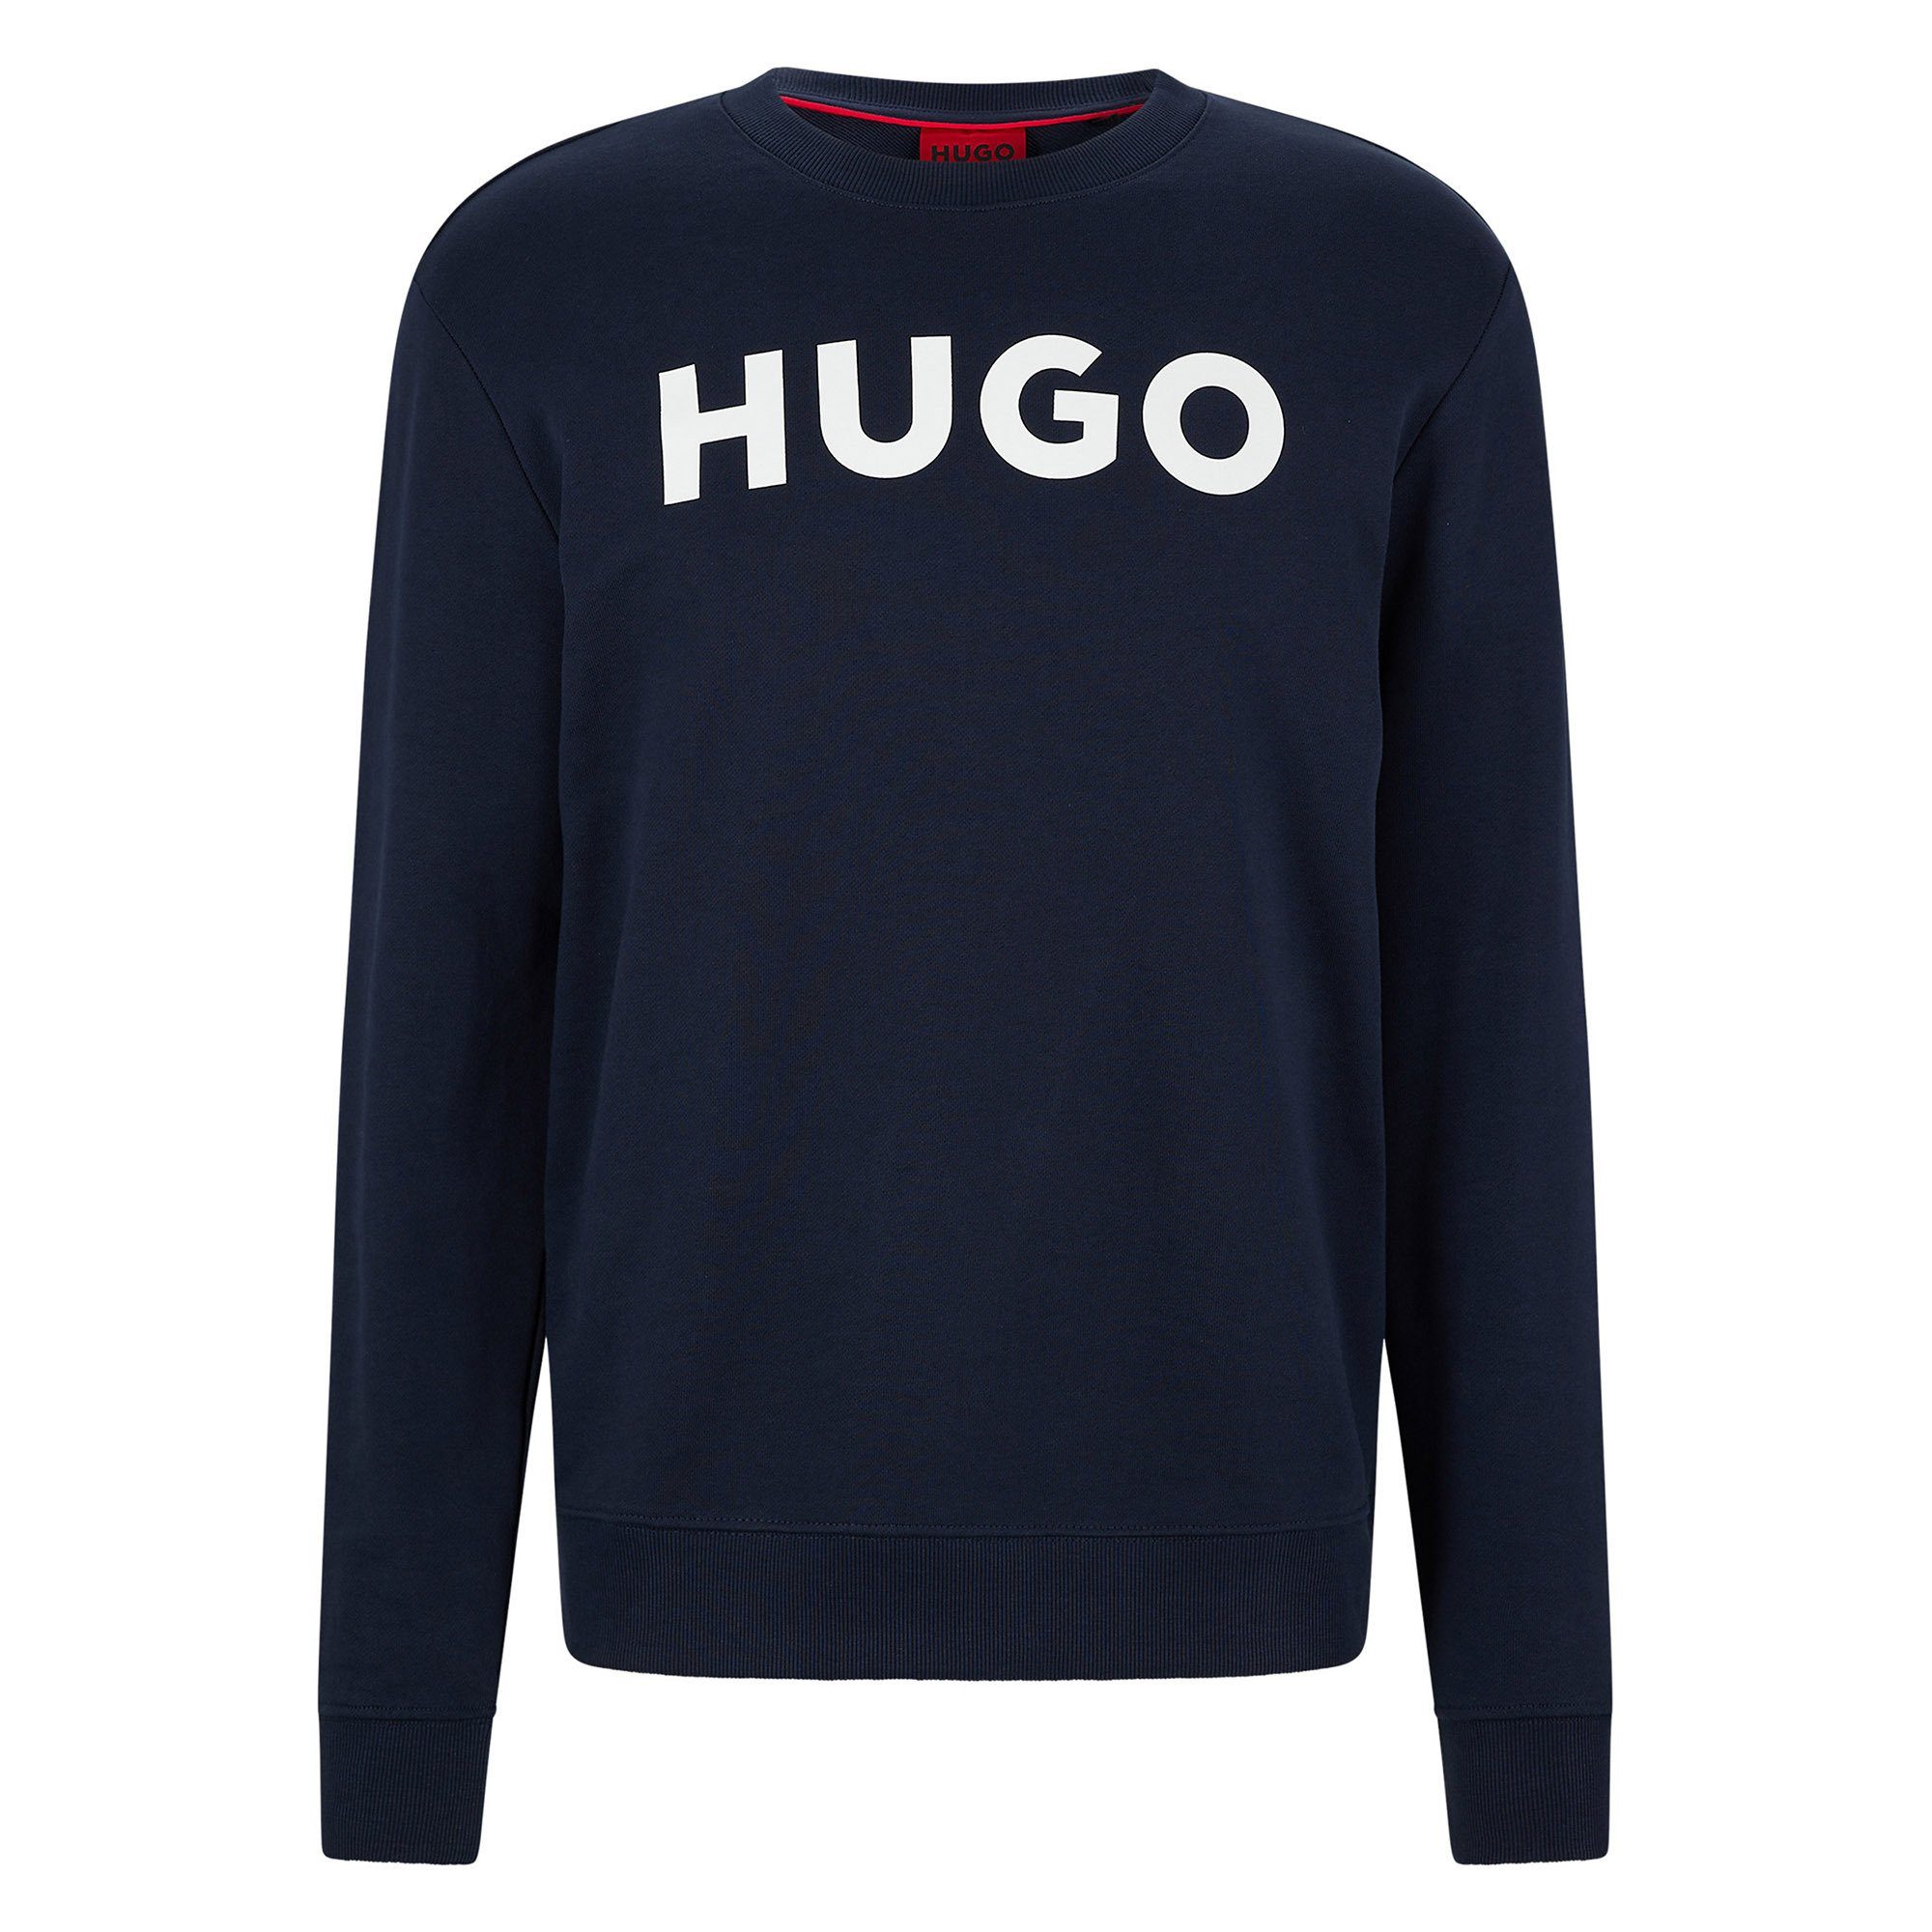 HUGO Sweatshirt Herren Sweater - DEM, French Dunkelblau Sweatshirt, Rundhals